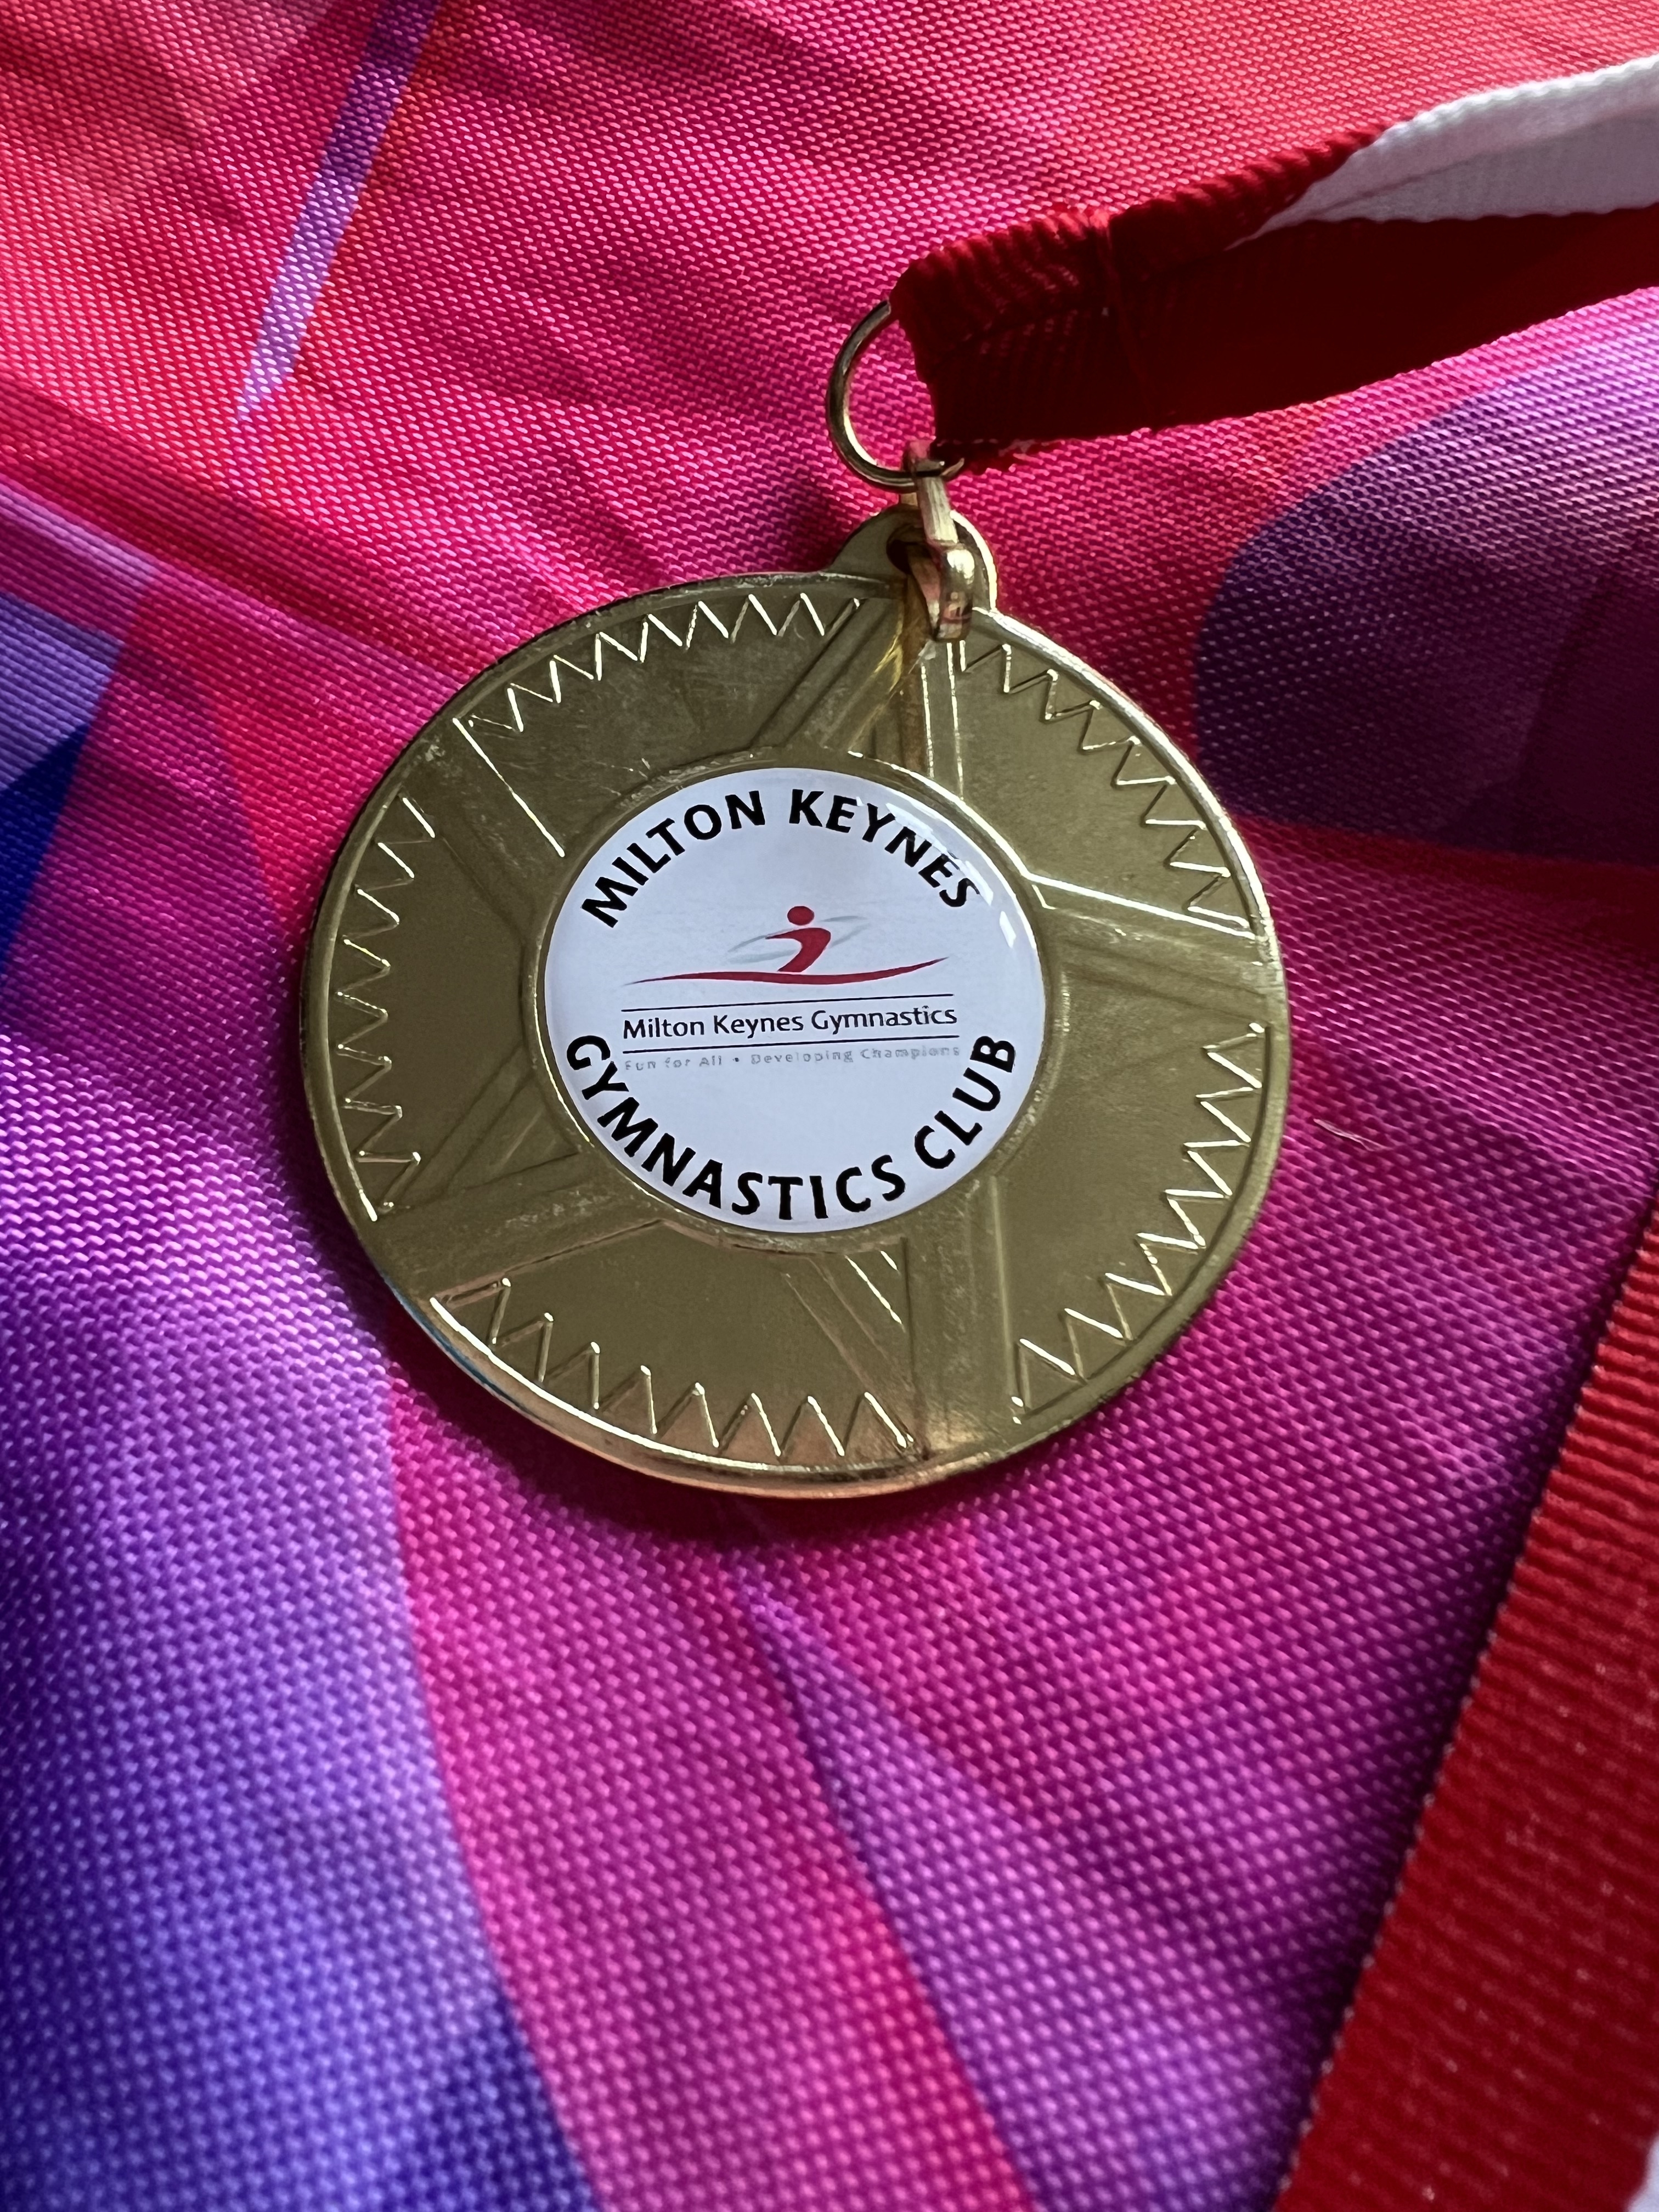 Stefan Kolimechkov won a Gold medal on Rings for Chelsea Gymnastics at the 2023 Milton Keynes Adult Gymnastics Competition